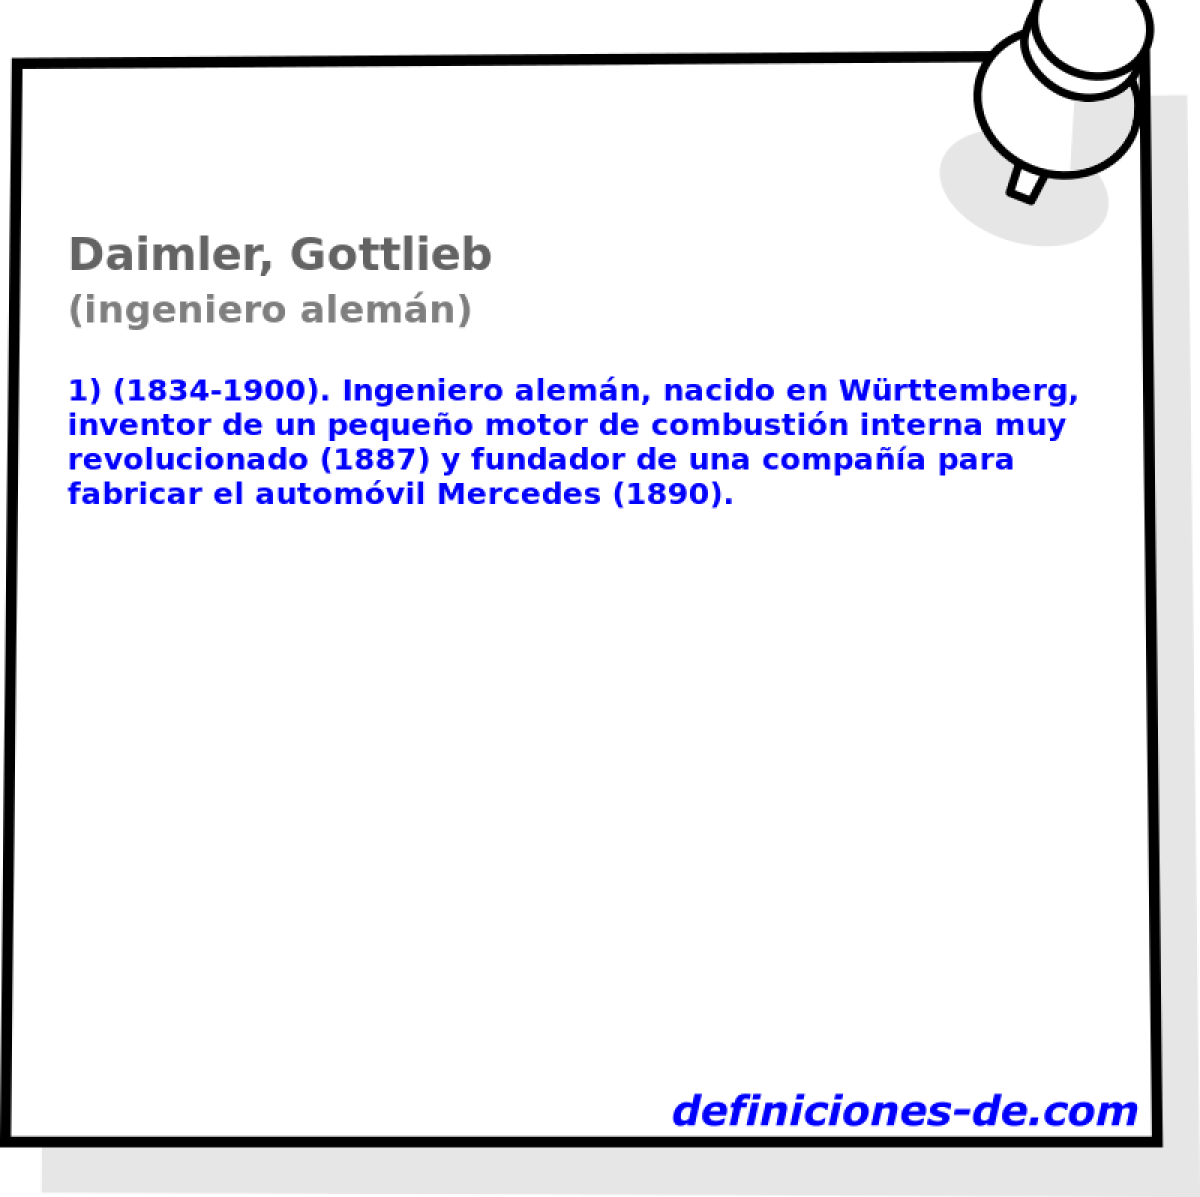 Daimler, Gottlieb (ingeniero alemn)